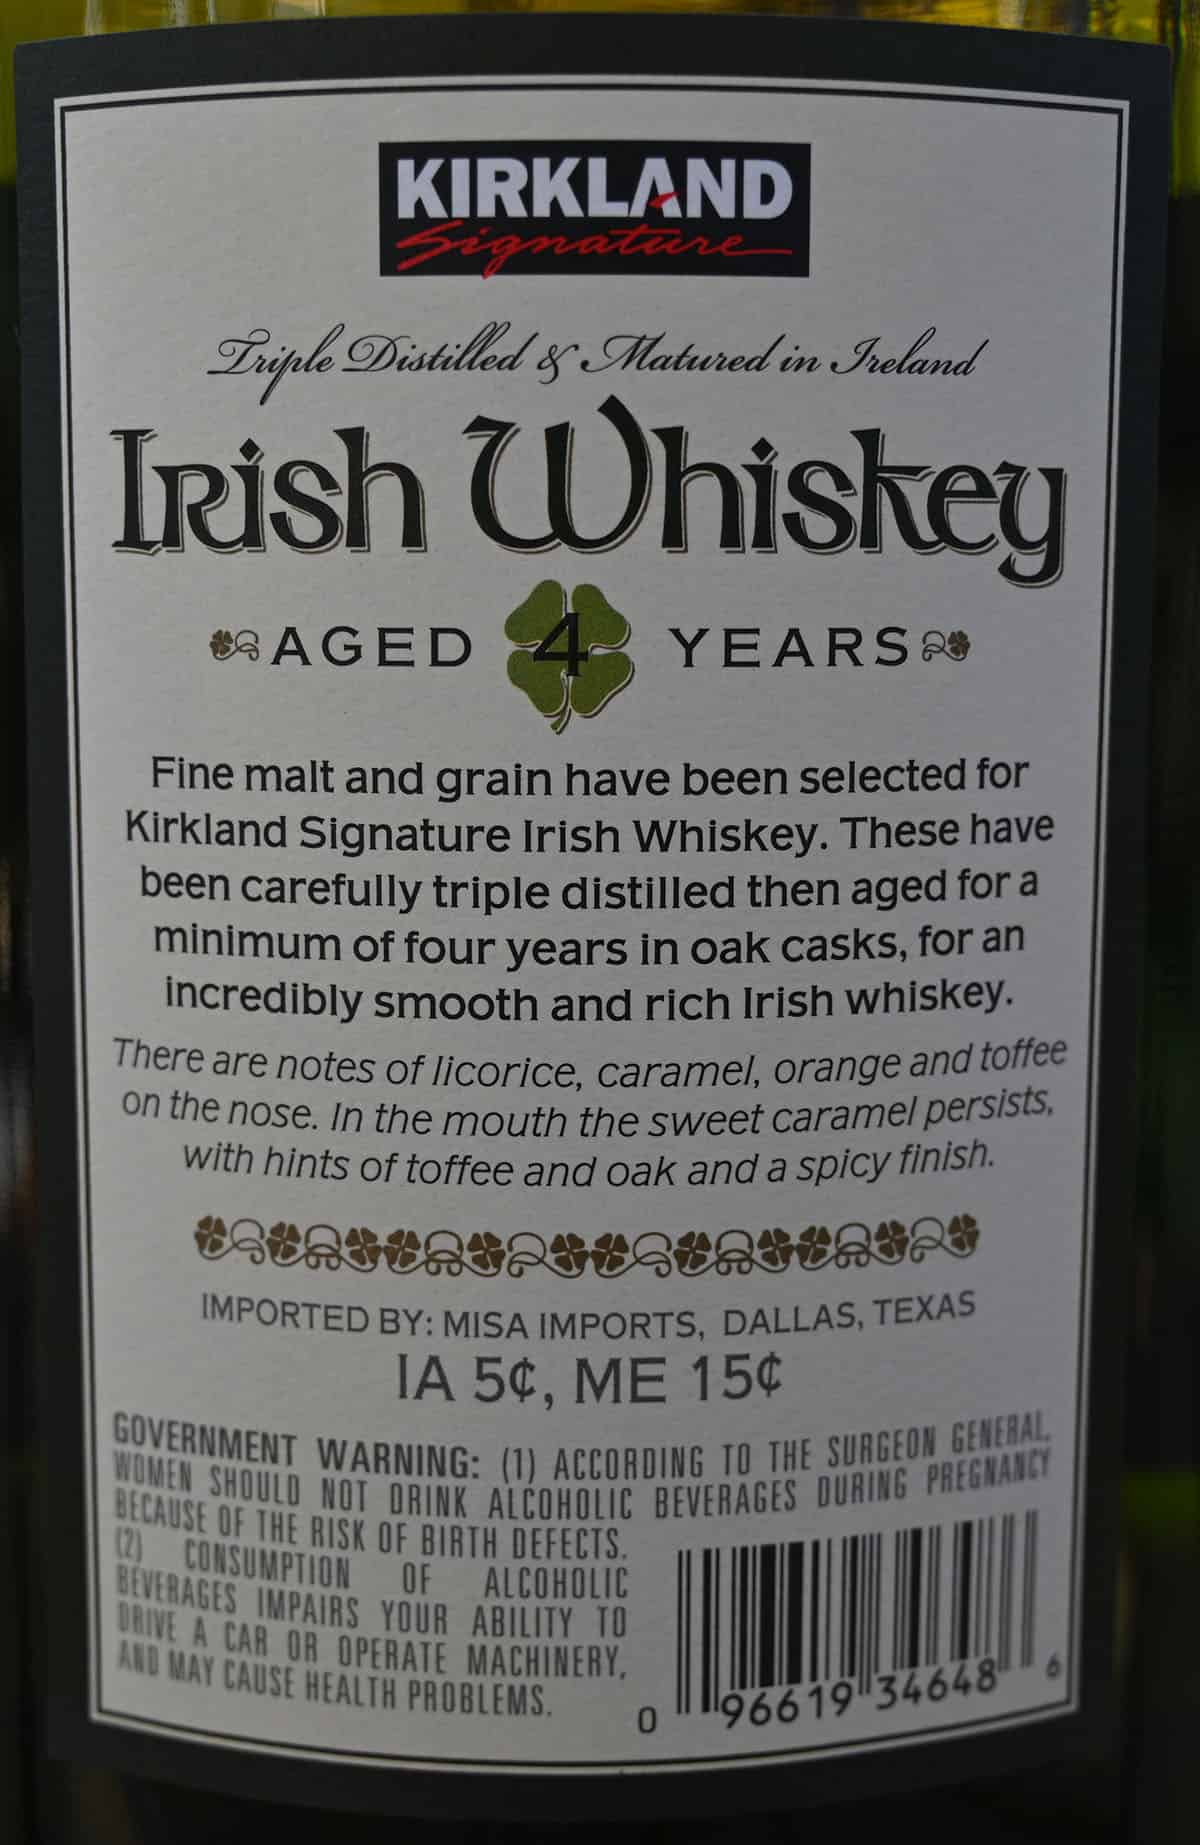 Image of the back label on the Costco Irish Whiskey bottle.